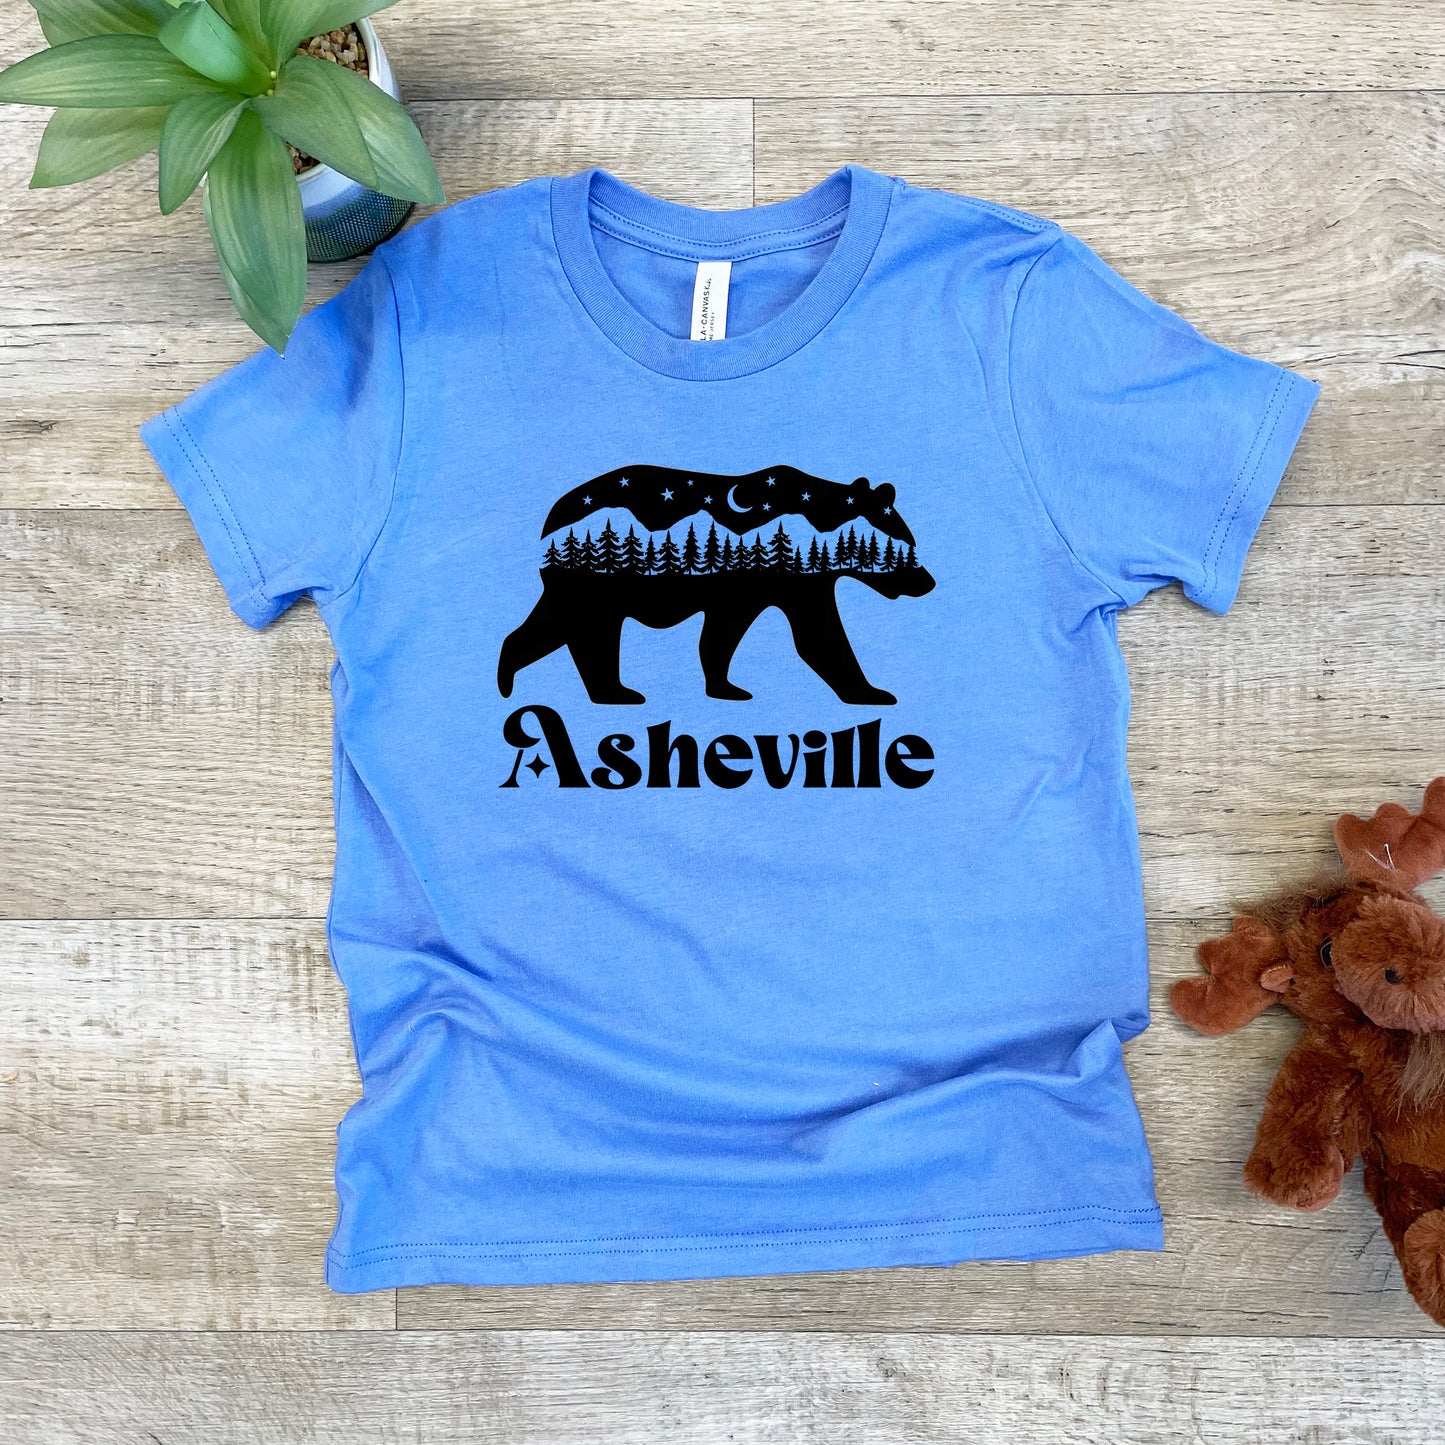 Asheville Bear - Kid's Tee - Columbia Blue or Lavender